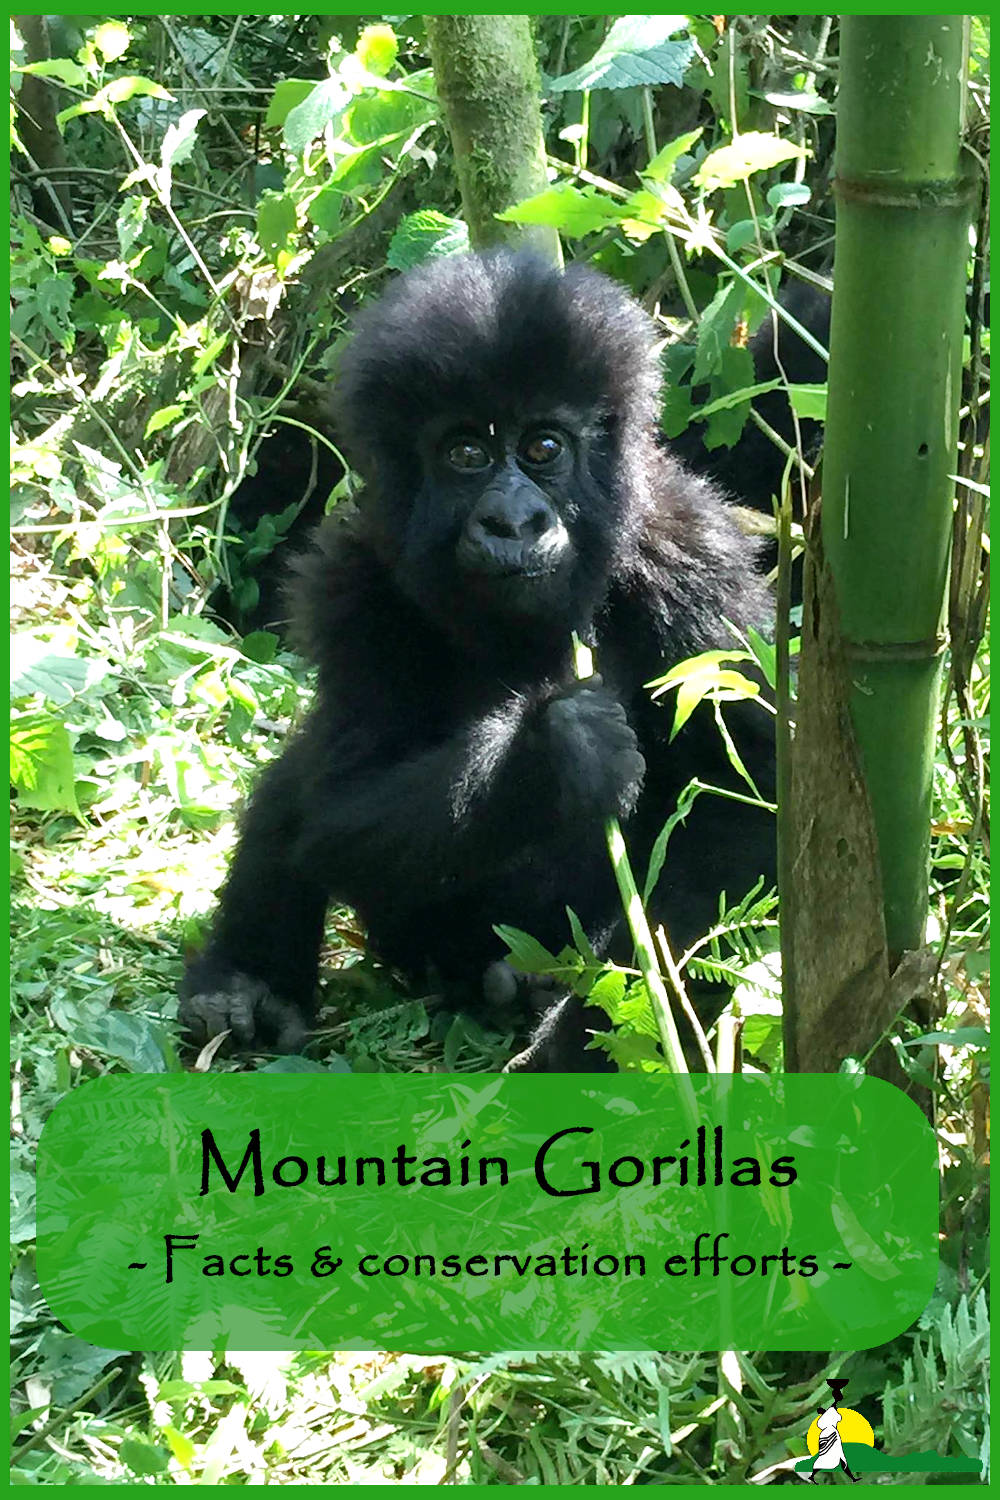 Mountain Gorilla conservation & facts